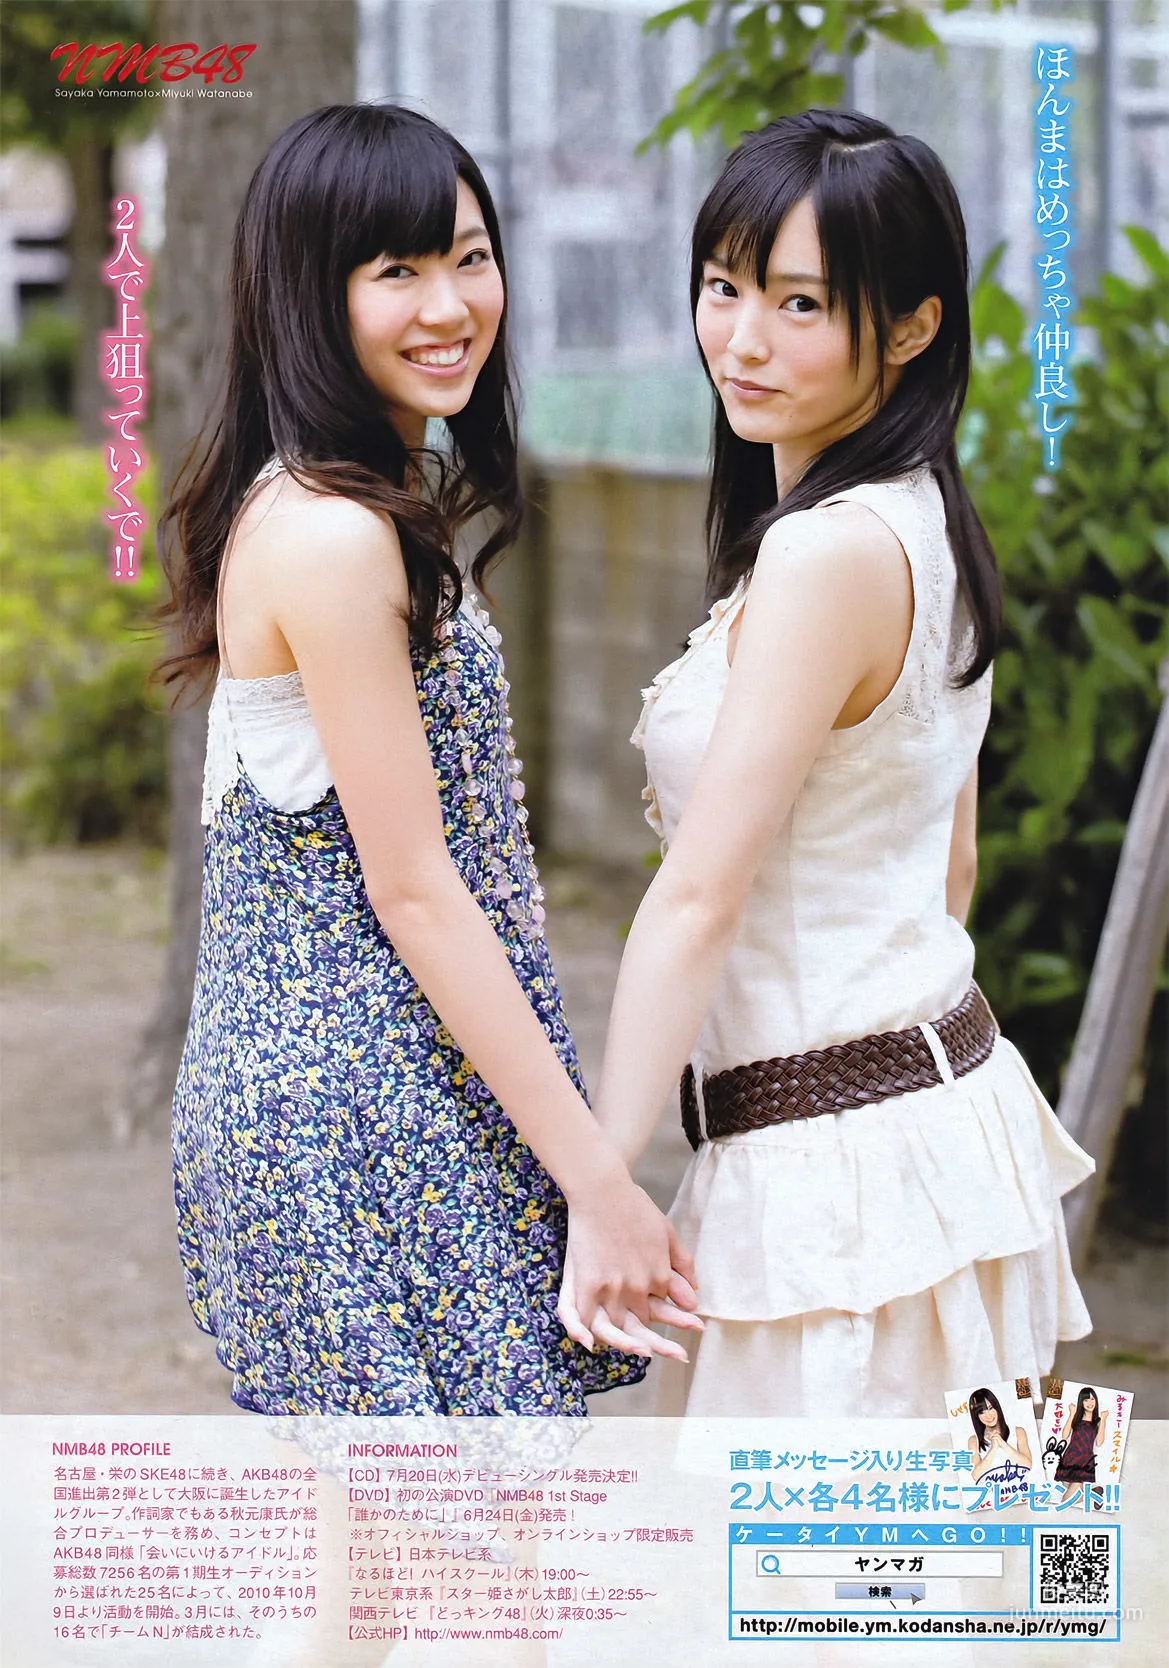 [Young Magazine] YM7 松井珠理奈 NMB48 2011年No.27 写真杂志14